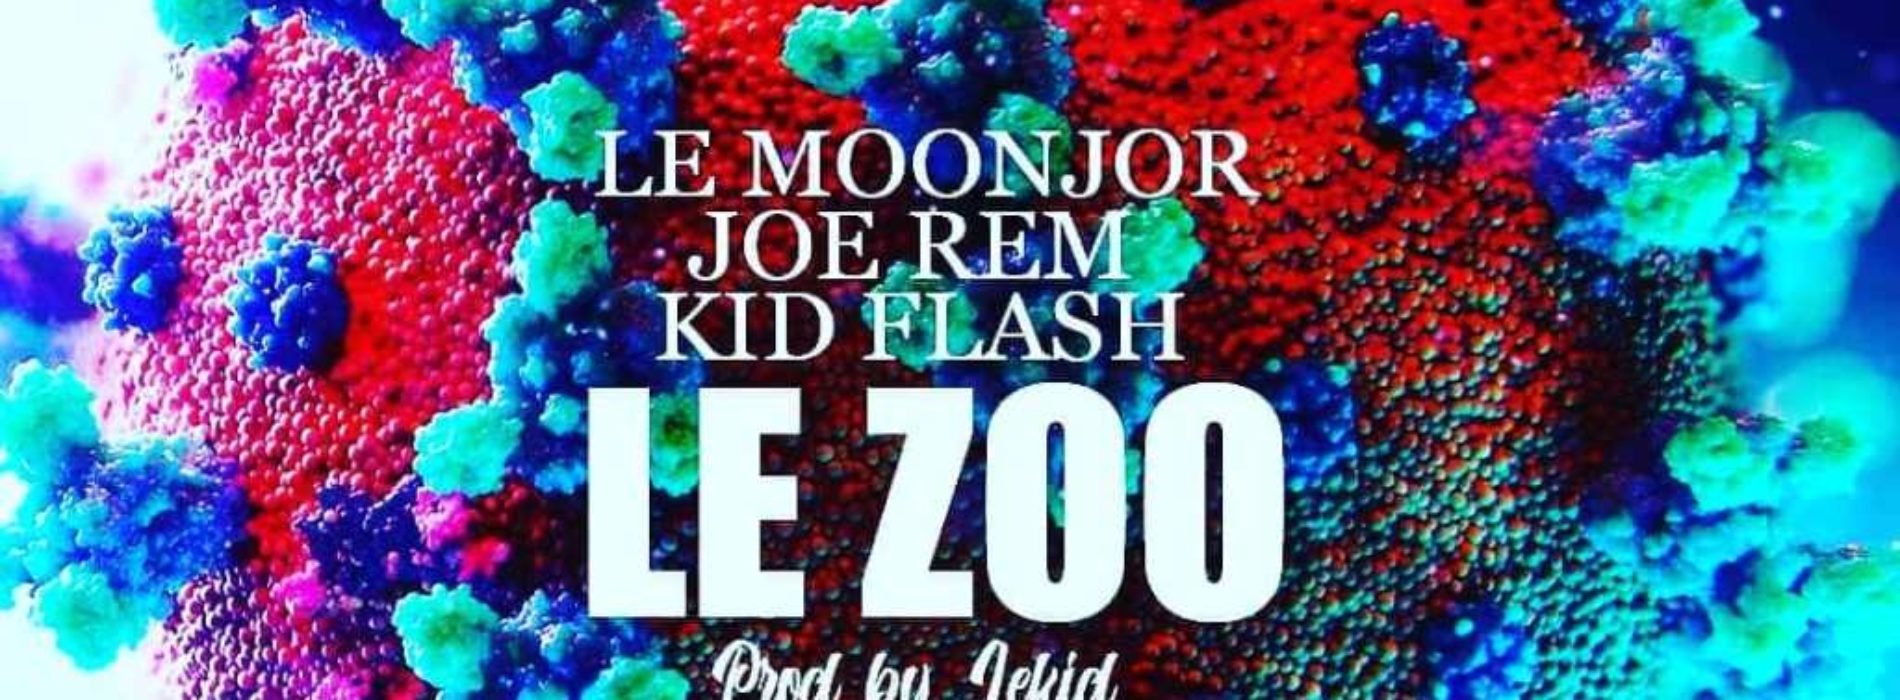 Le Moonjor x Joe Rem x Kid Flash – Le Zoo (Prod by Lekid) – Avril 2020